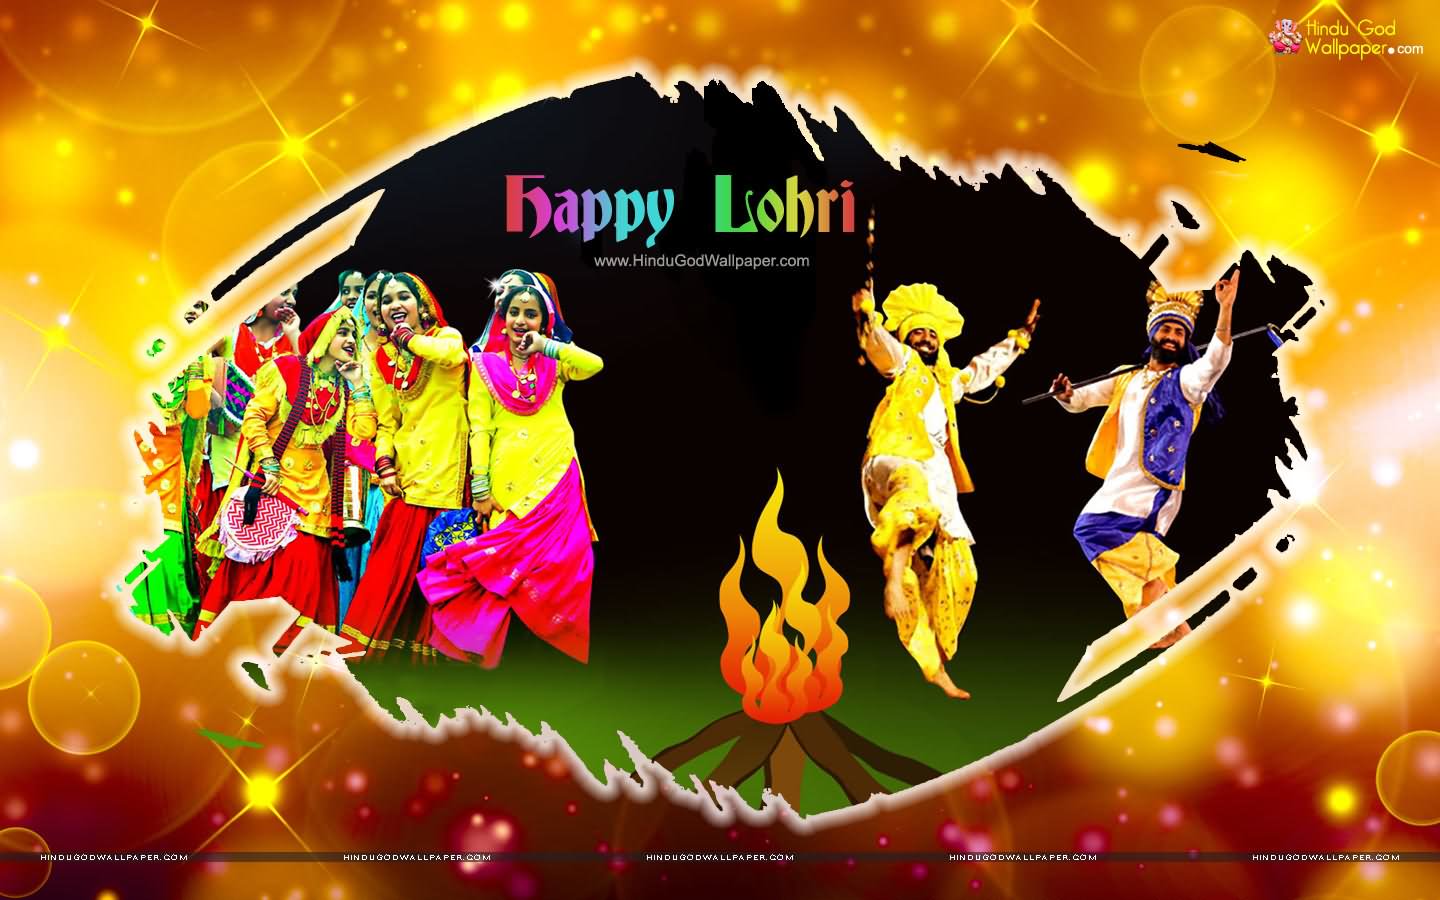 Happy Lohri To You Wallpaper